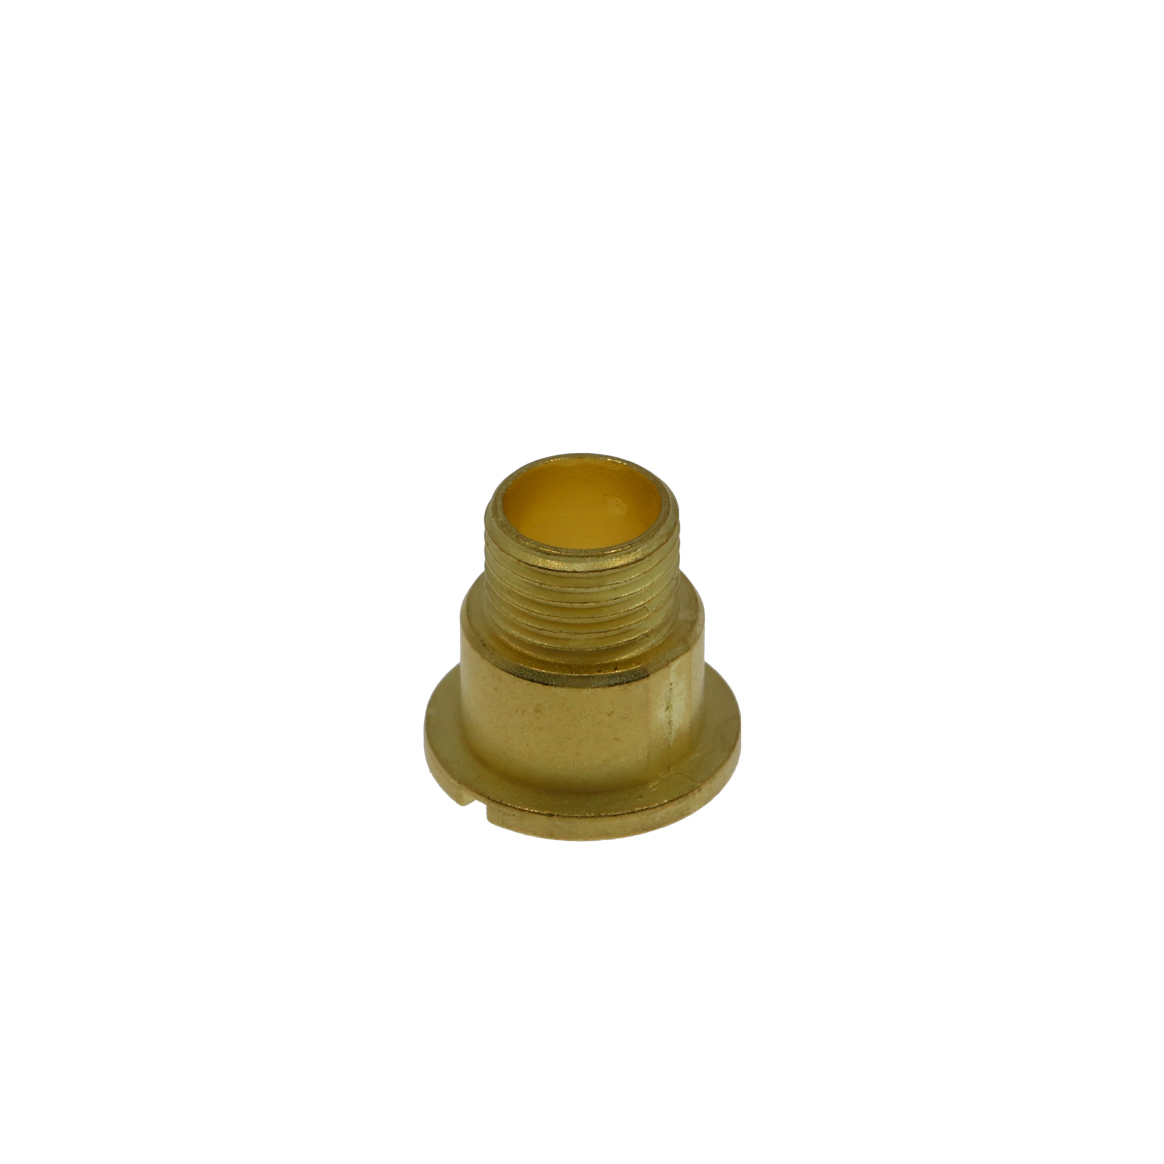 Fixation nut brass 11 mm